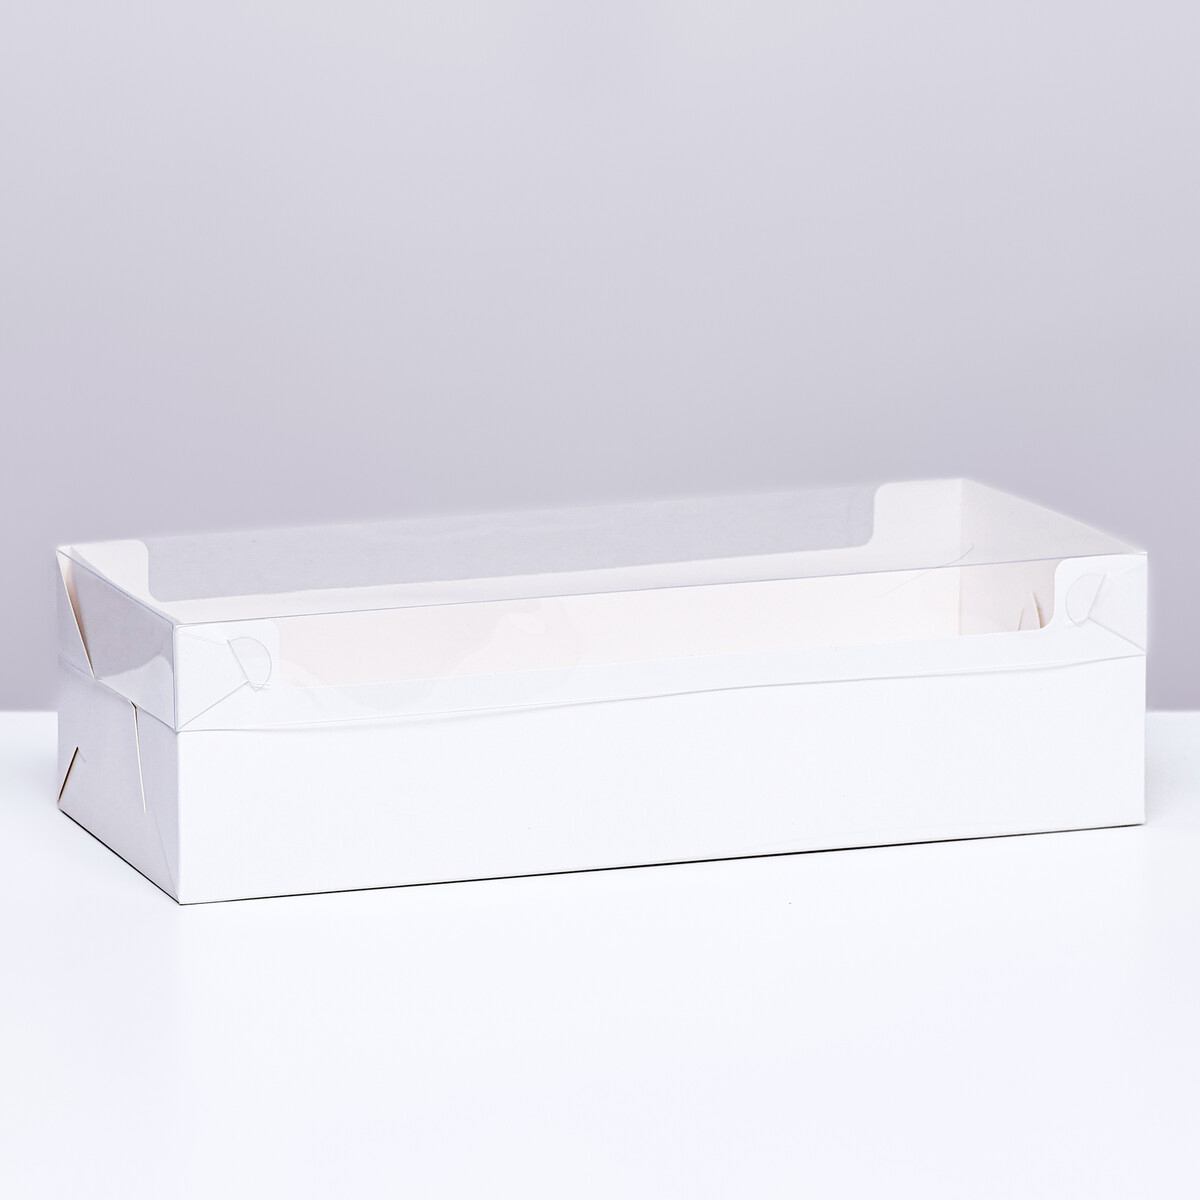 Коробка под рулет белая, 30 х 11 х 8 см коробка под рулет с ручками белая 16 5 х 11 х 10 см